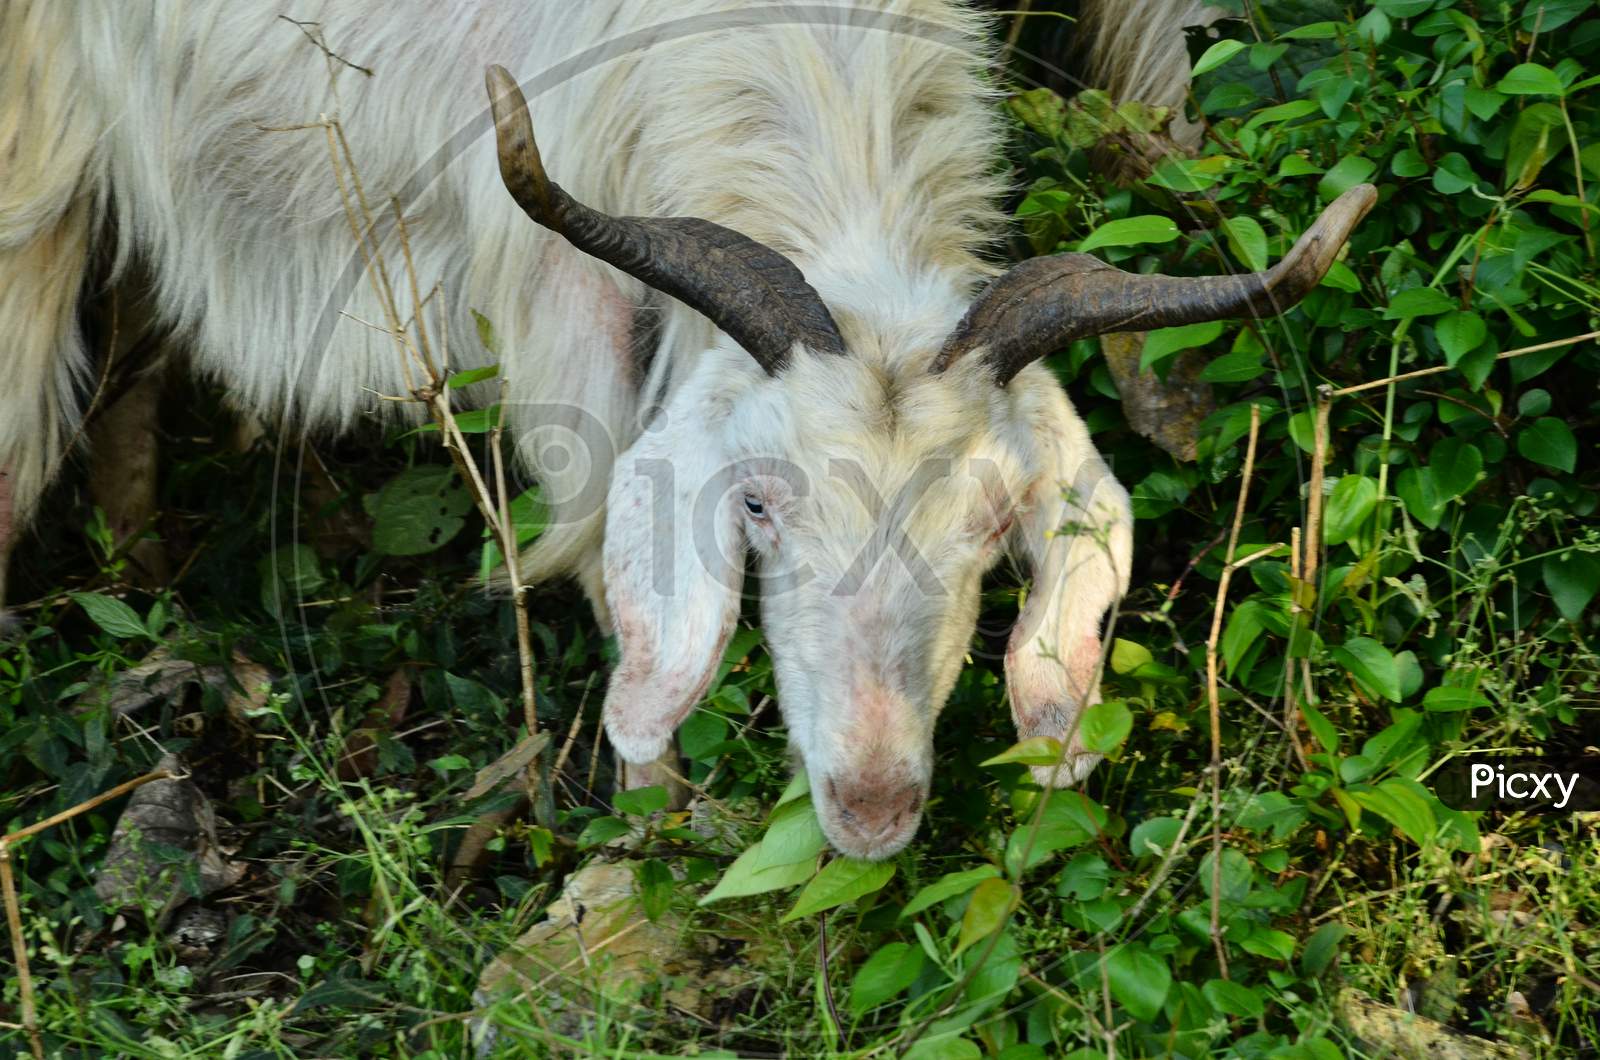 Goat at natural location in Himachal Pradesh, India